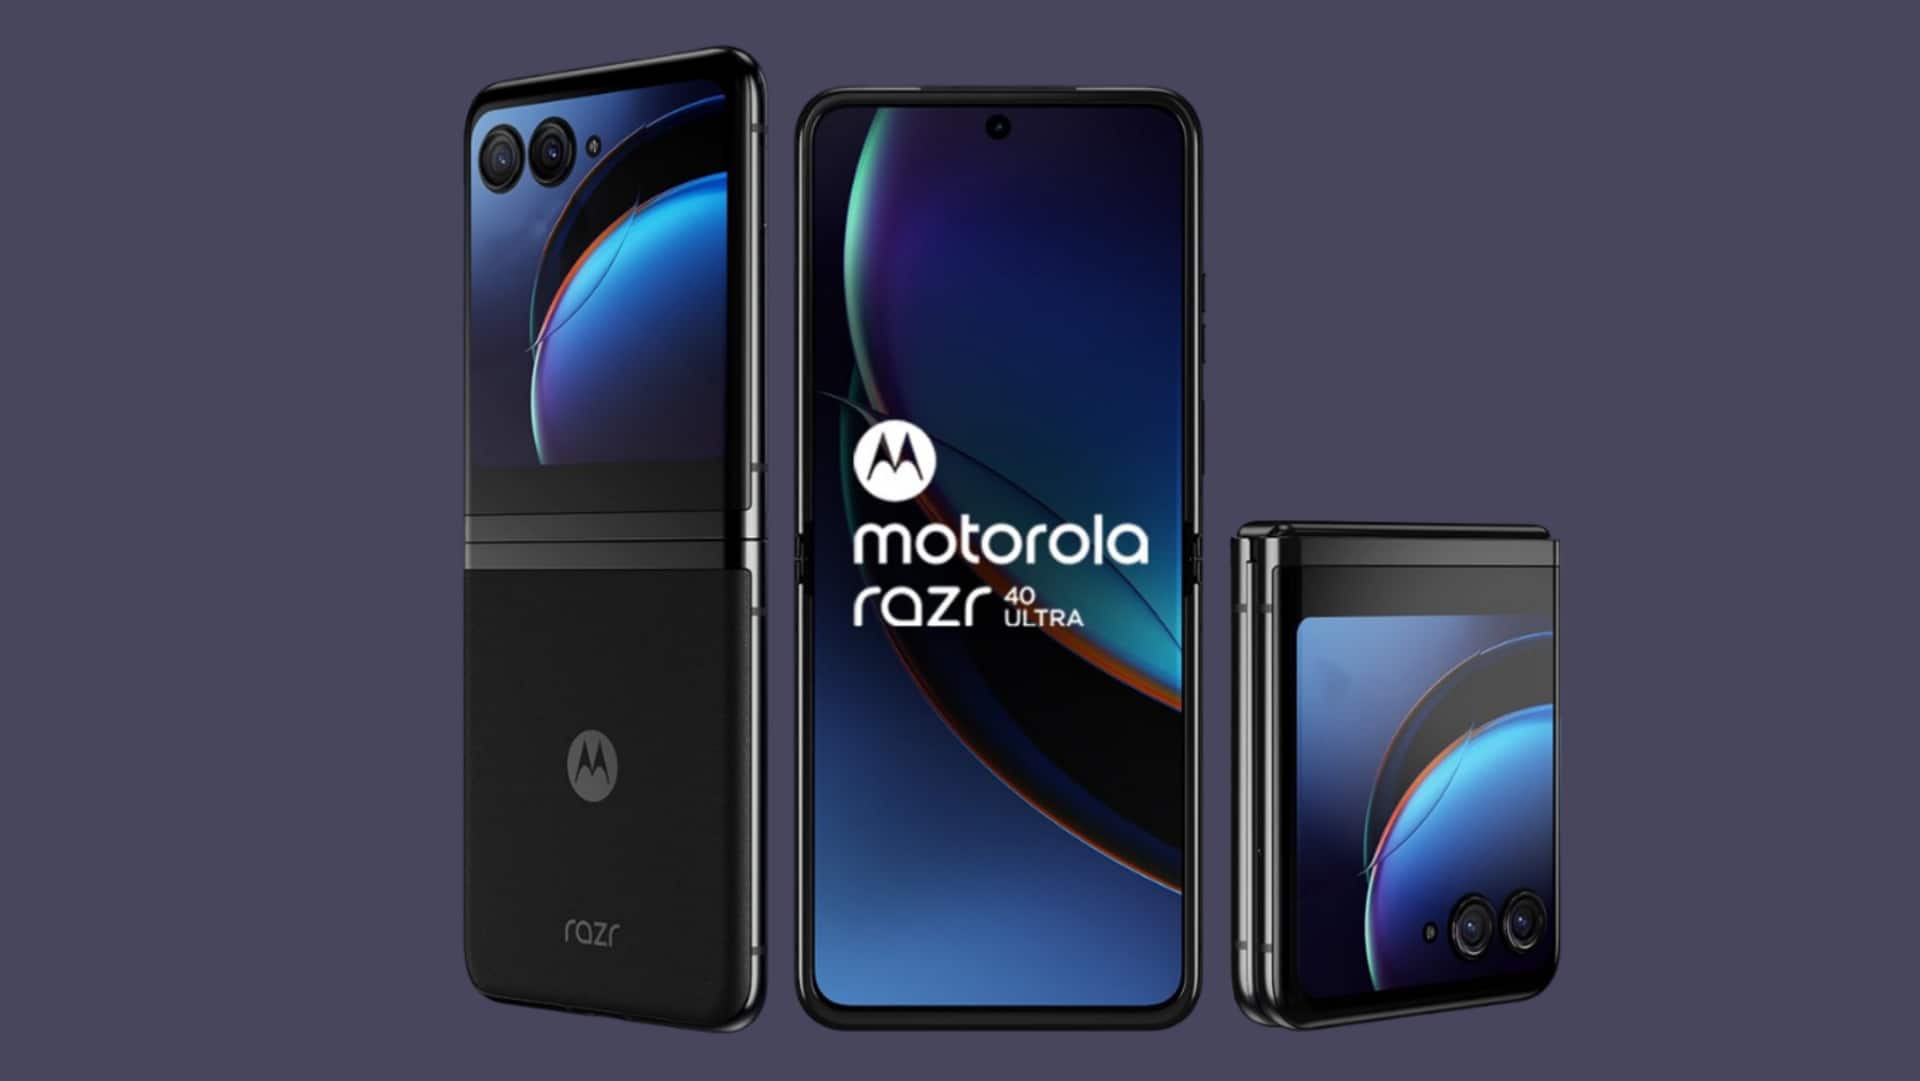 Motorola Moto Razr 40 Ultra 5G foldable Phone 6.9 Snapdragon 8+ Gen1  Android 13